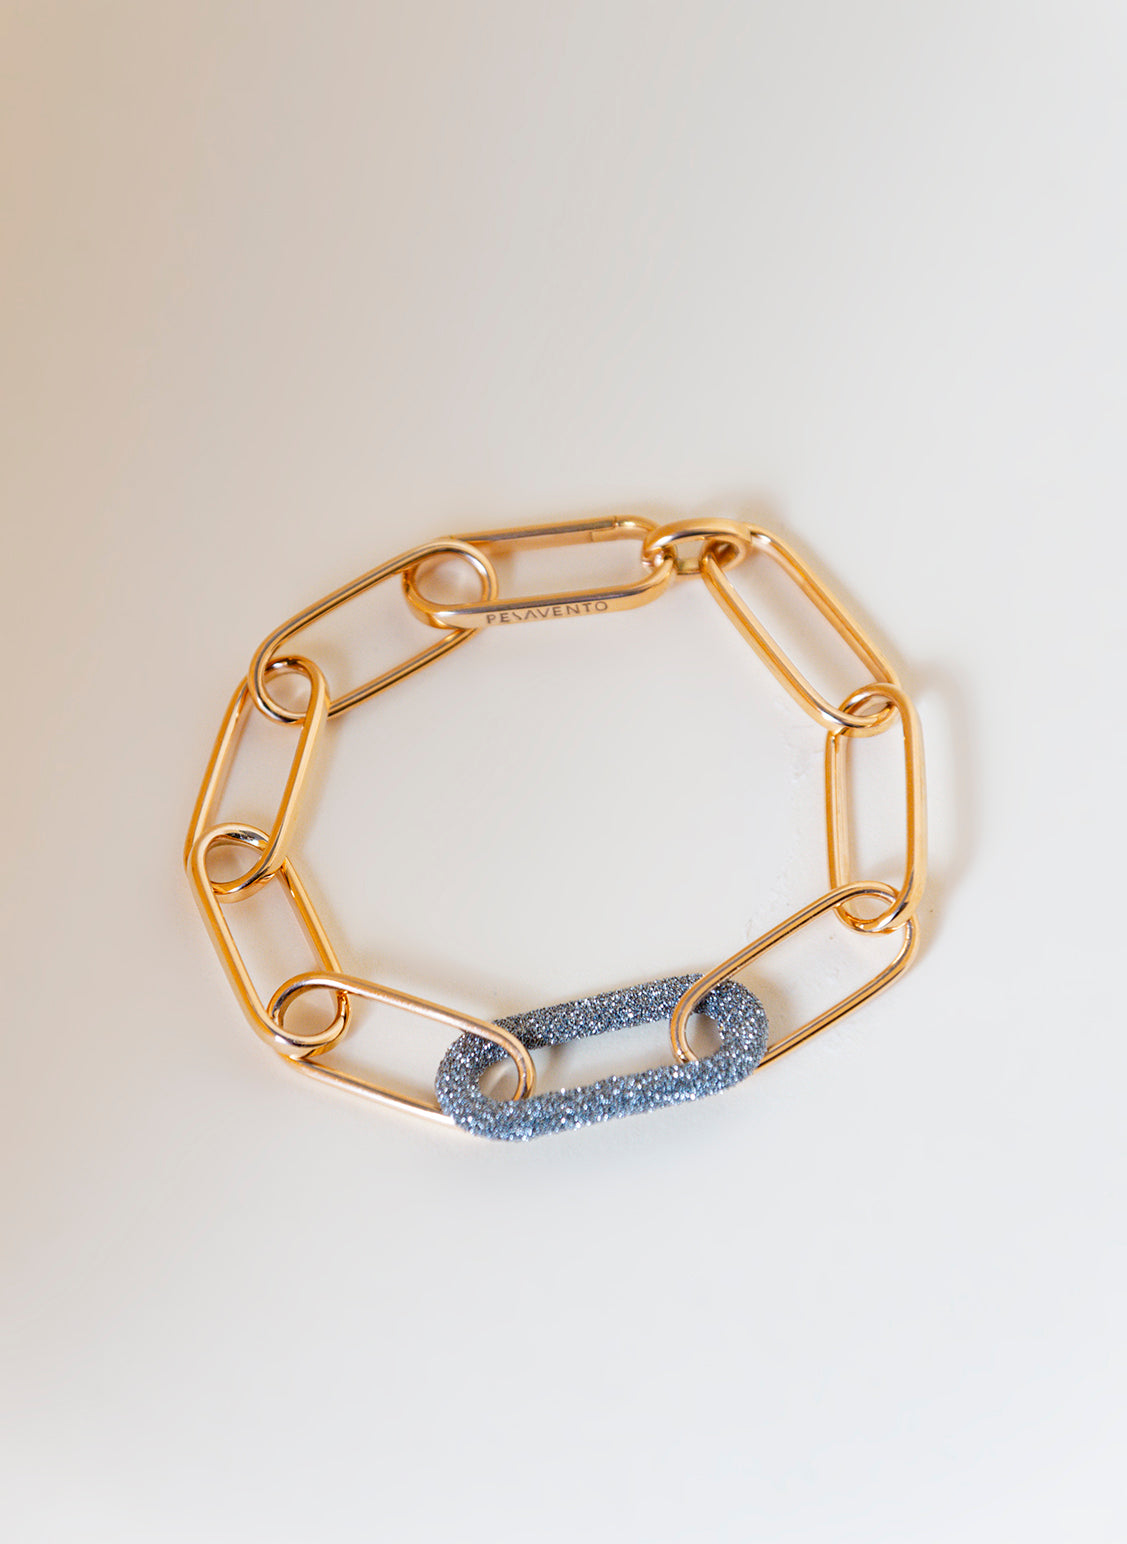 Gold Link Bracelet and Diamond Dust